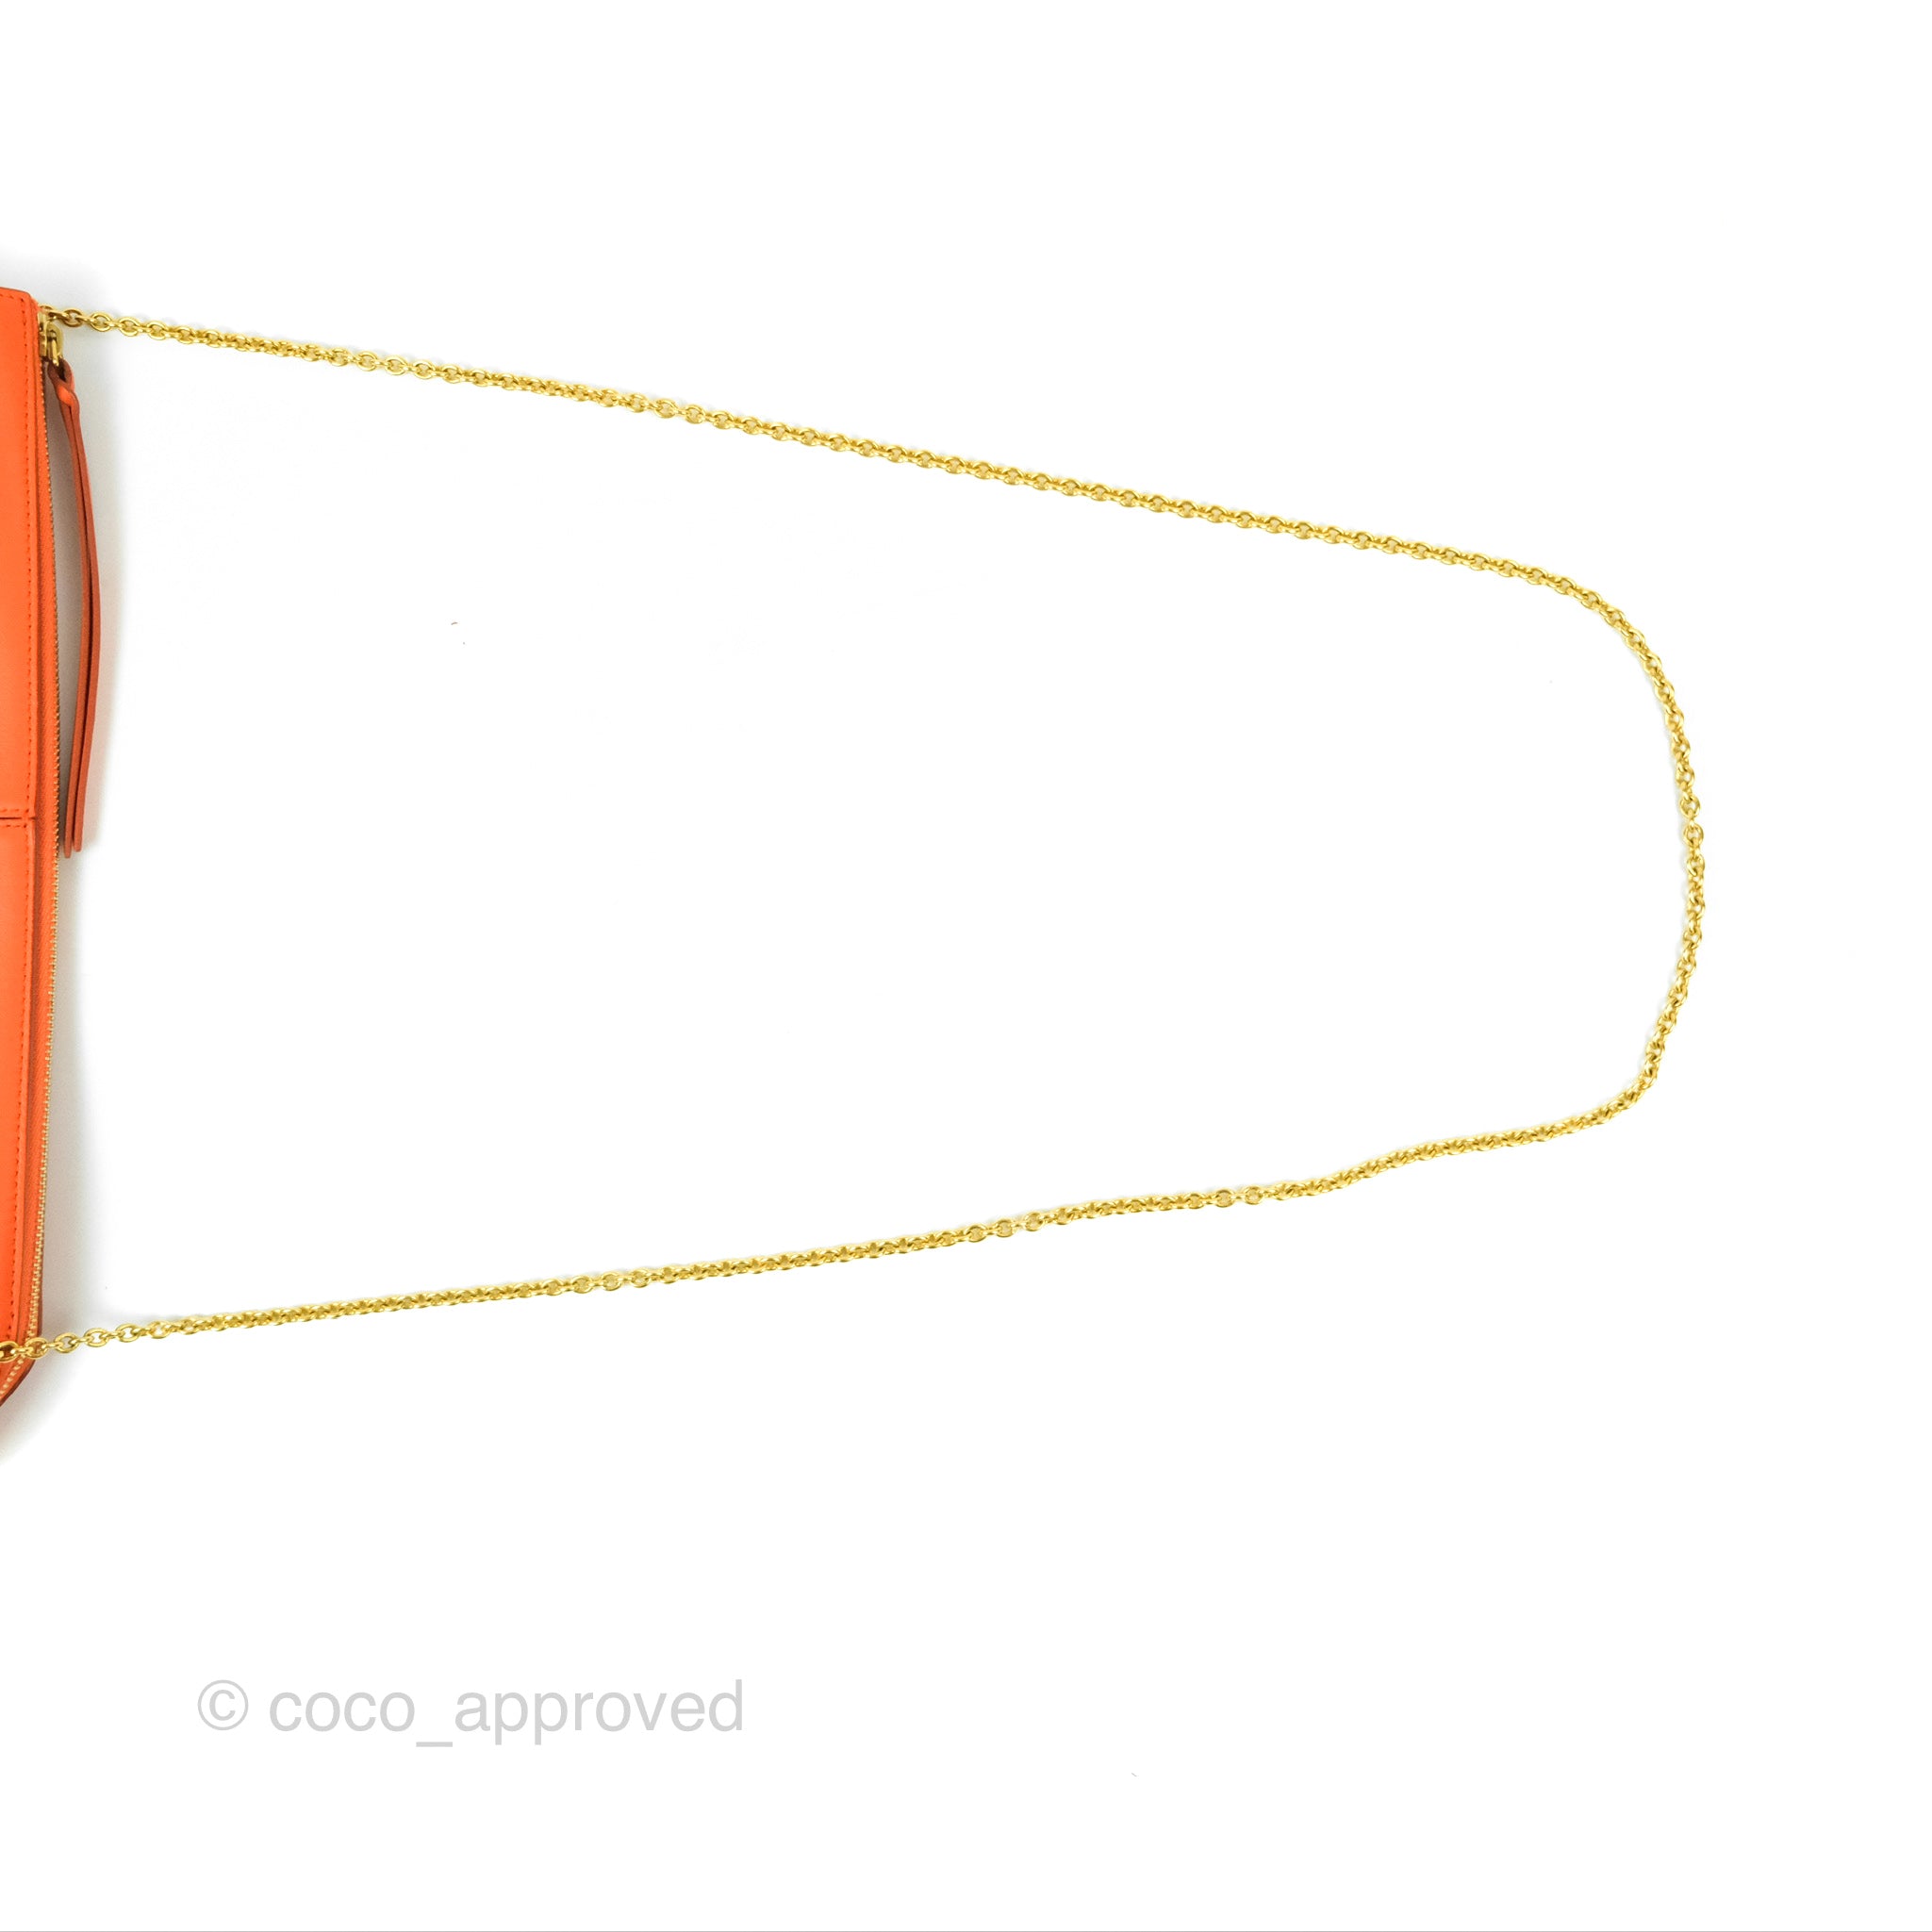 Celine Tri-Fold Clutch on Chain Orange Calfskin – Coco Approved Studio